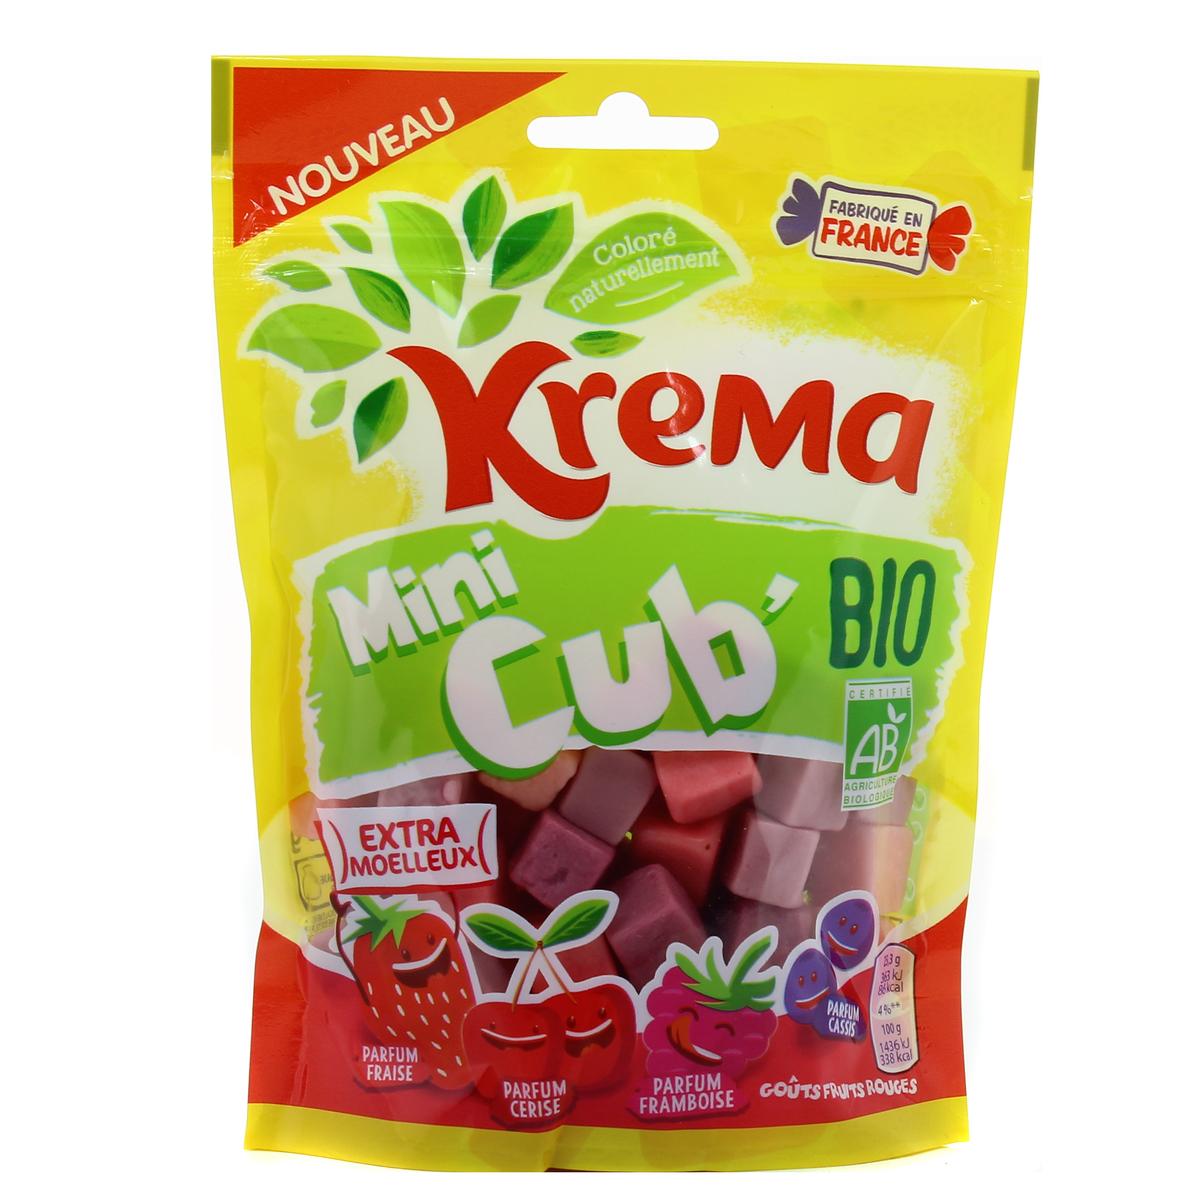 Acheter Krema Bonbons mini cub fruits rouges bio sans gélatine, 130g